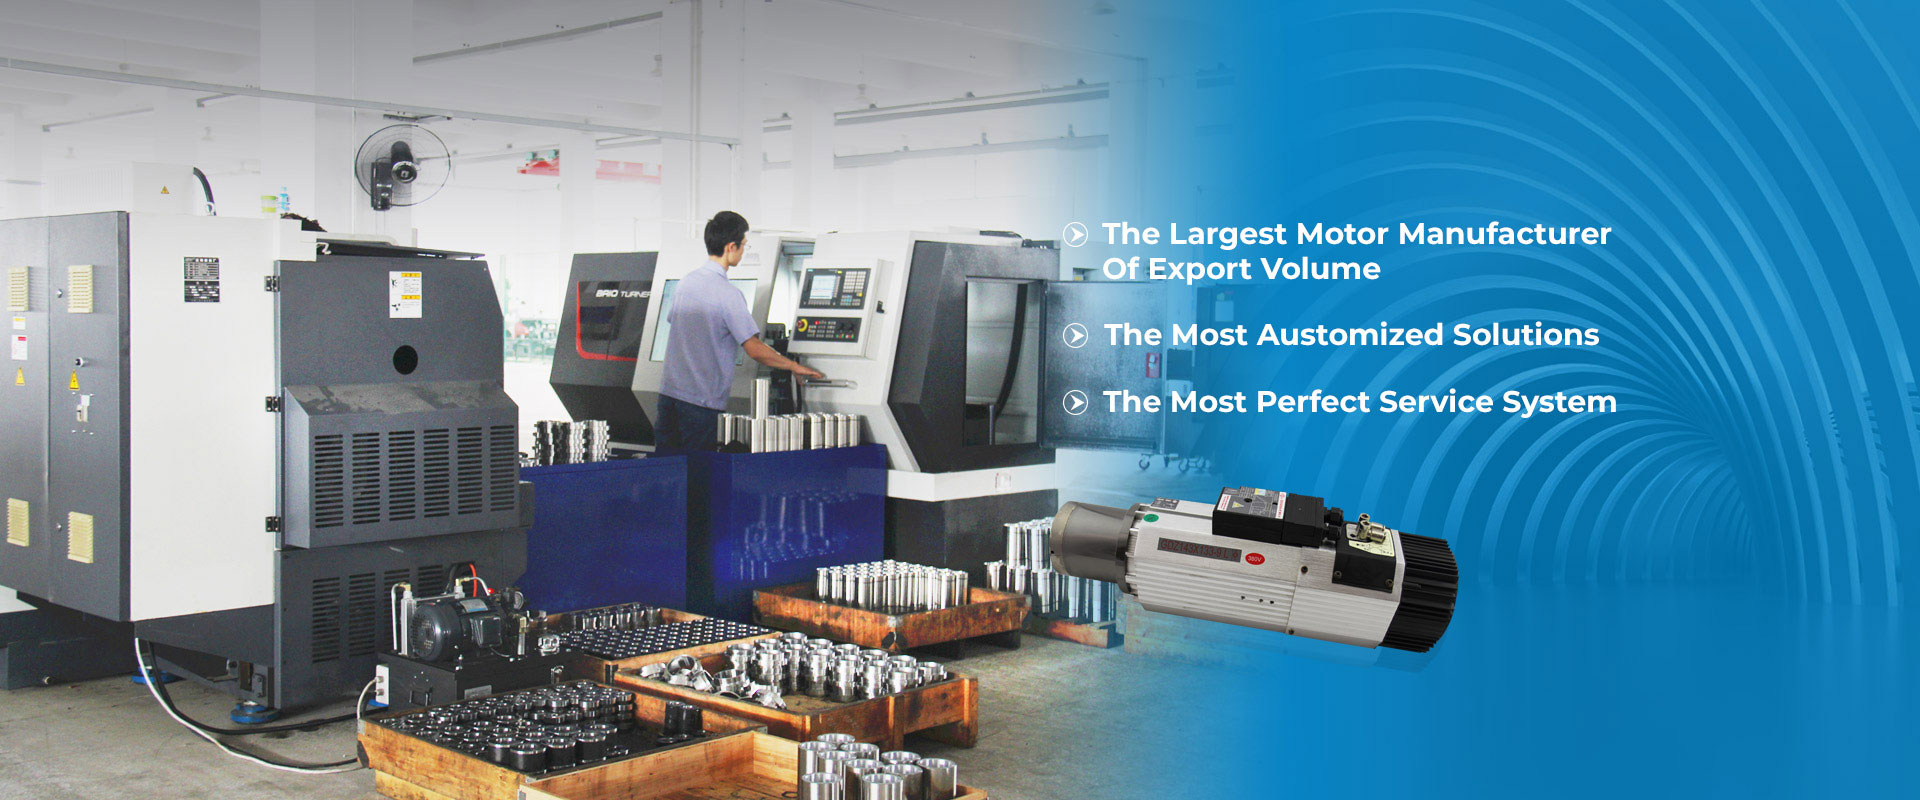 The largest motor manufacturer of export volume